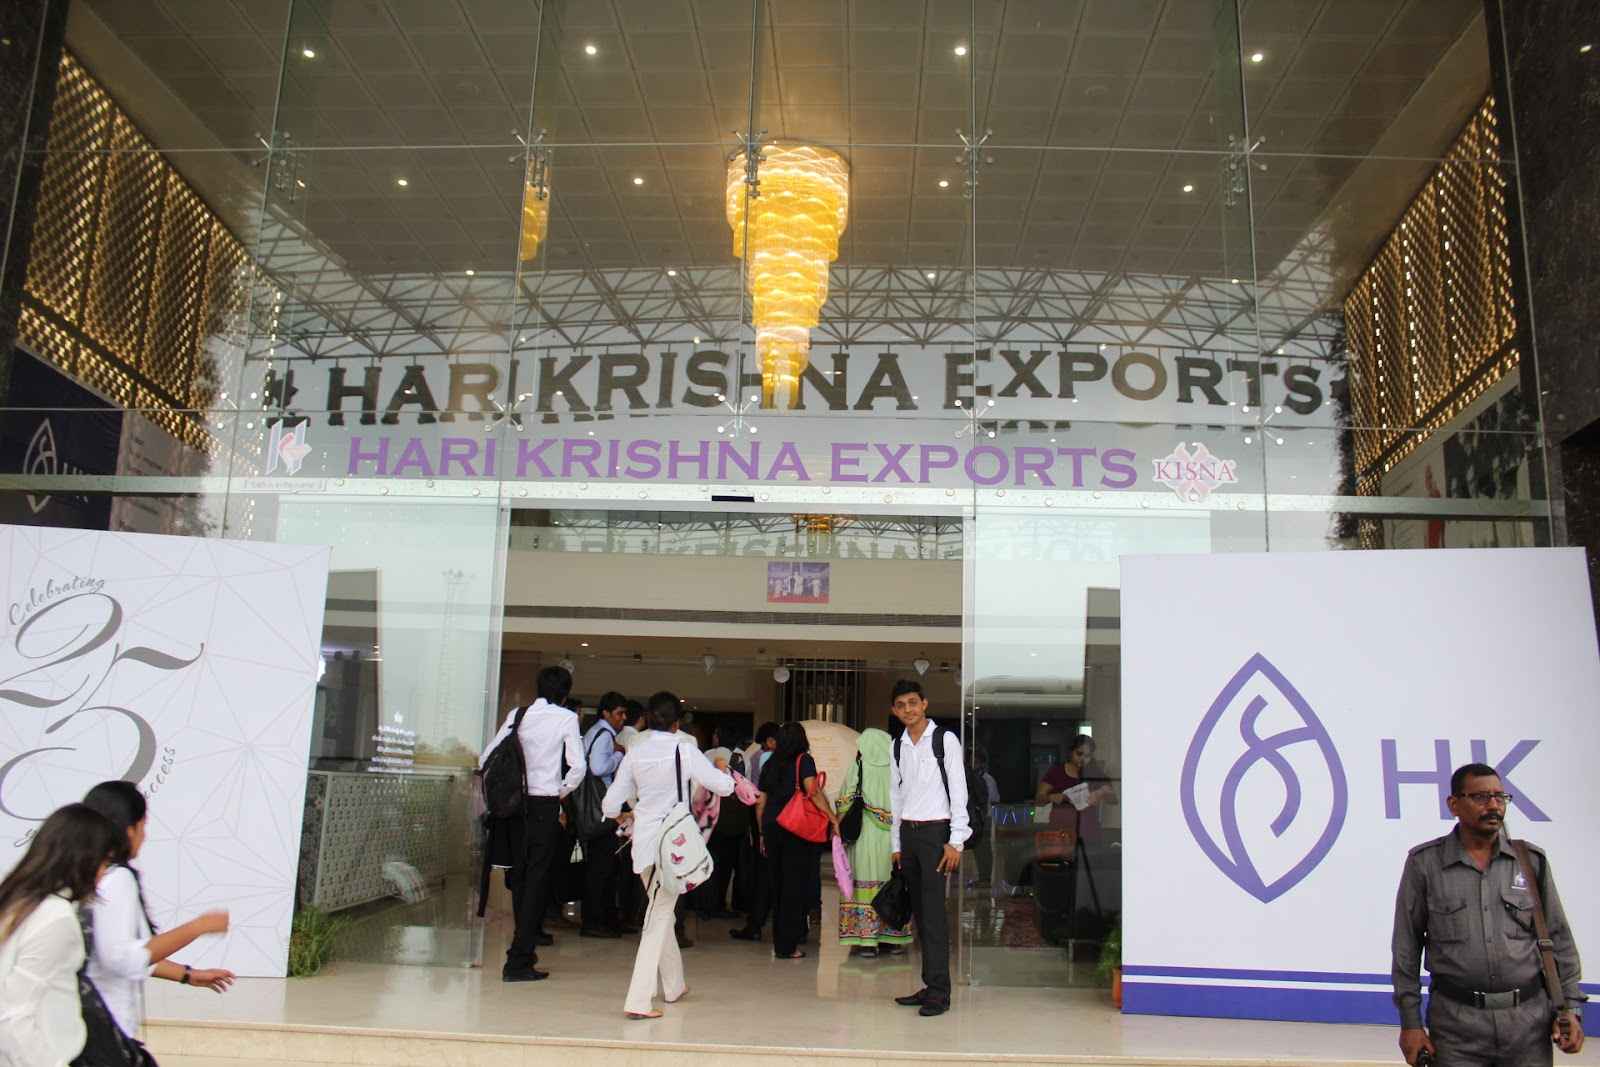 Hari krishna exports entrance